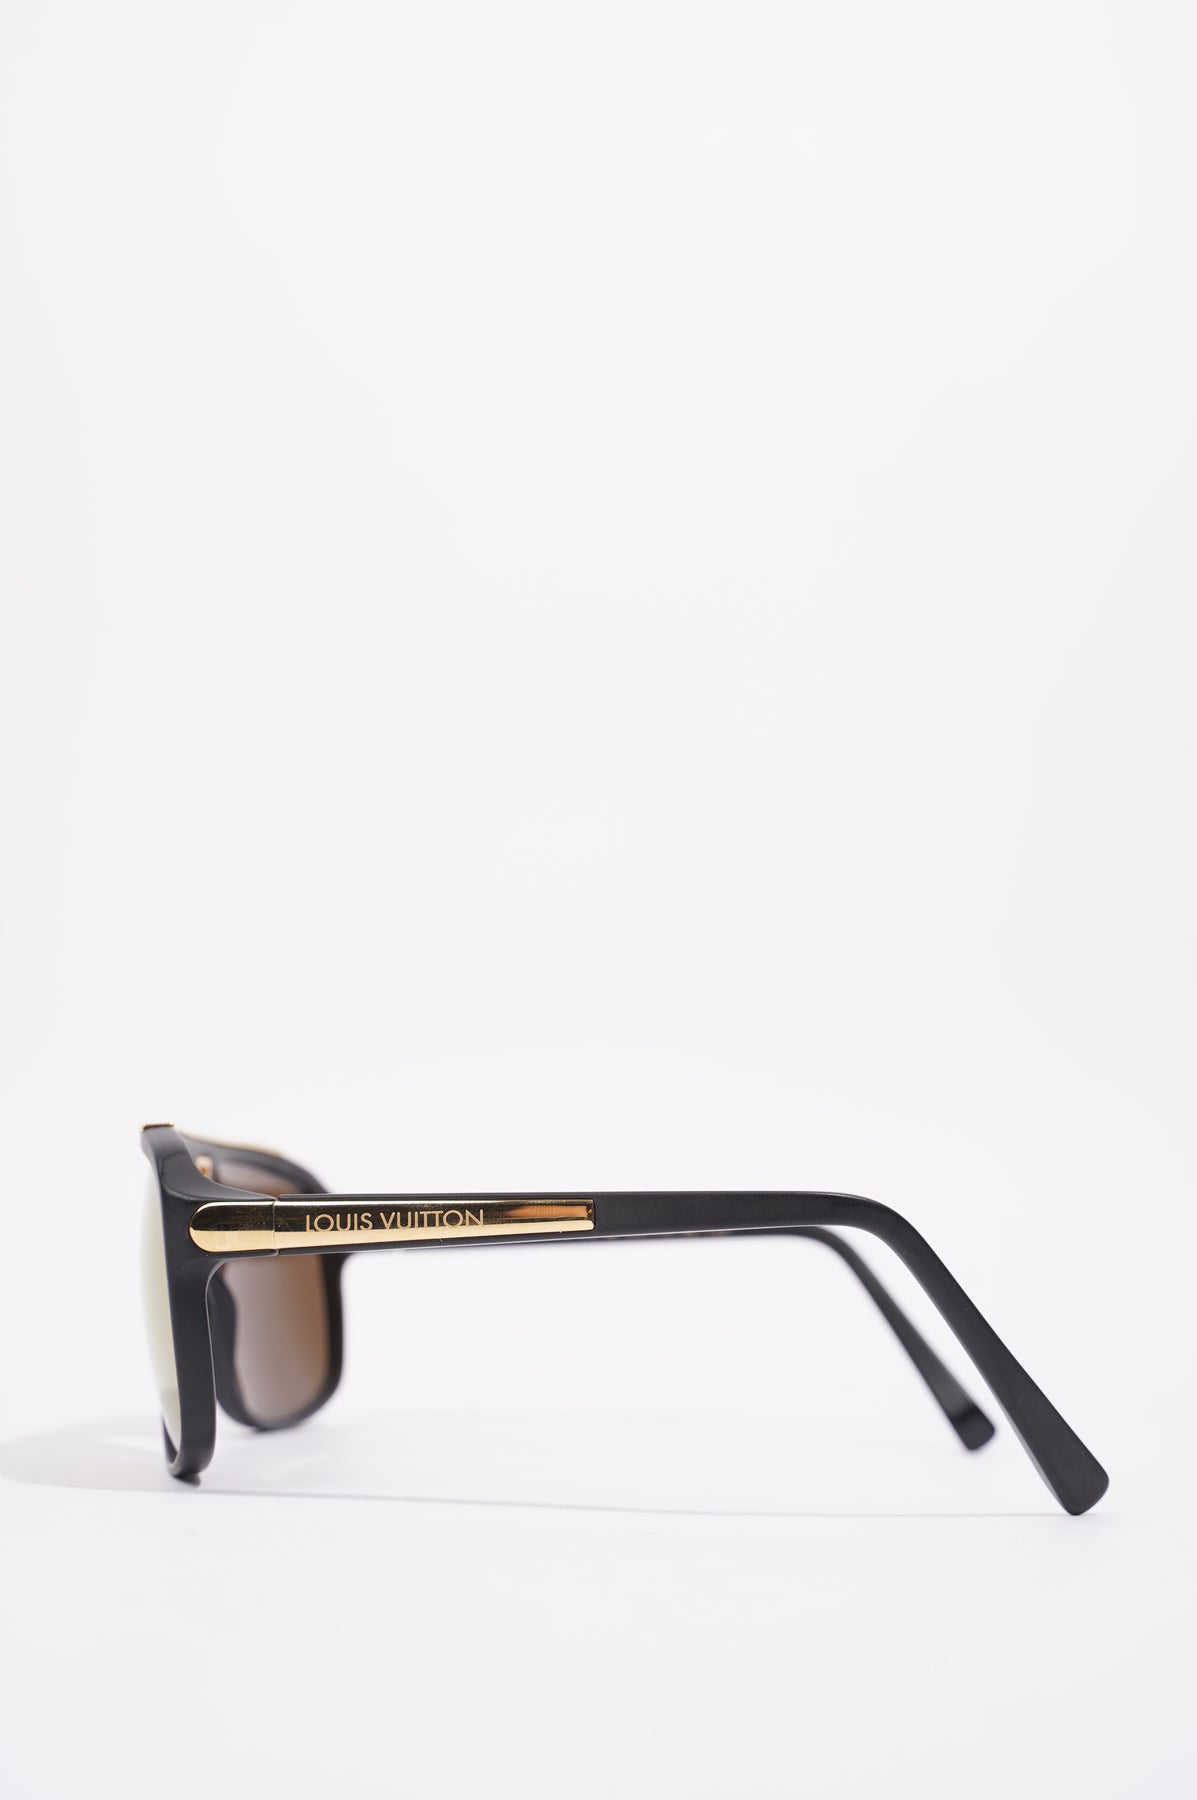 Premium Quality Gold Combination Evidence Sunglasses